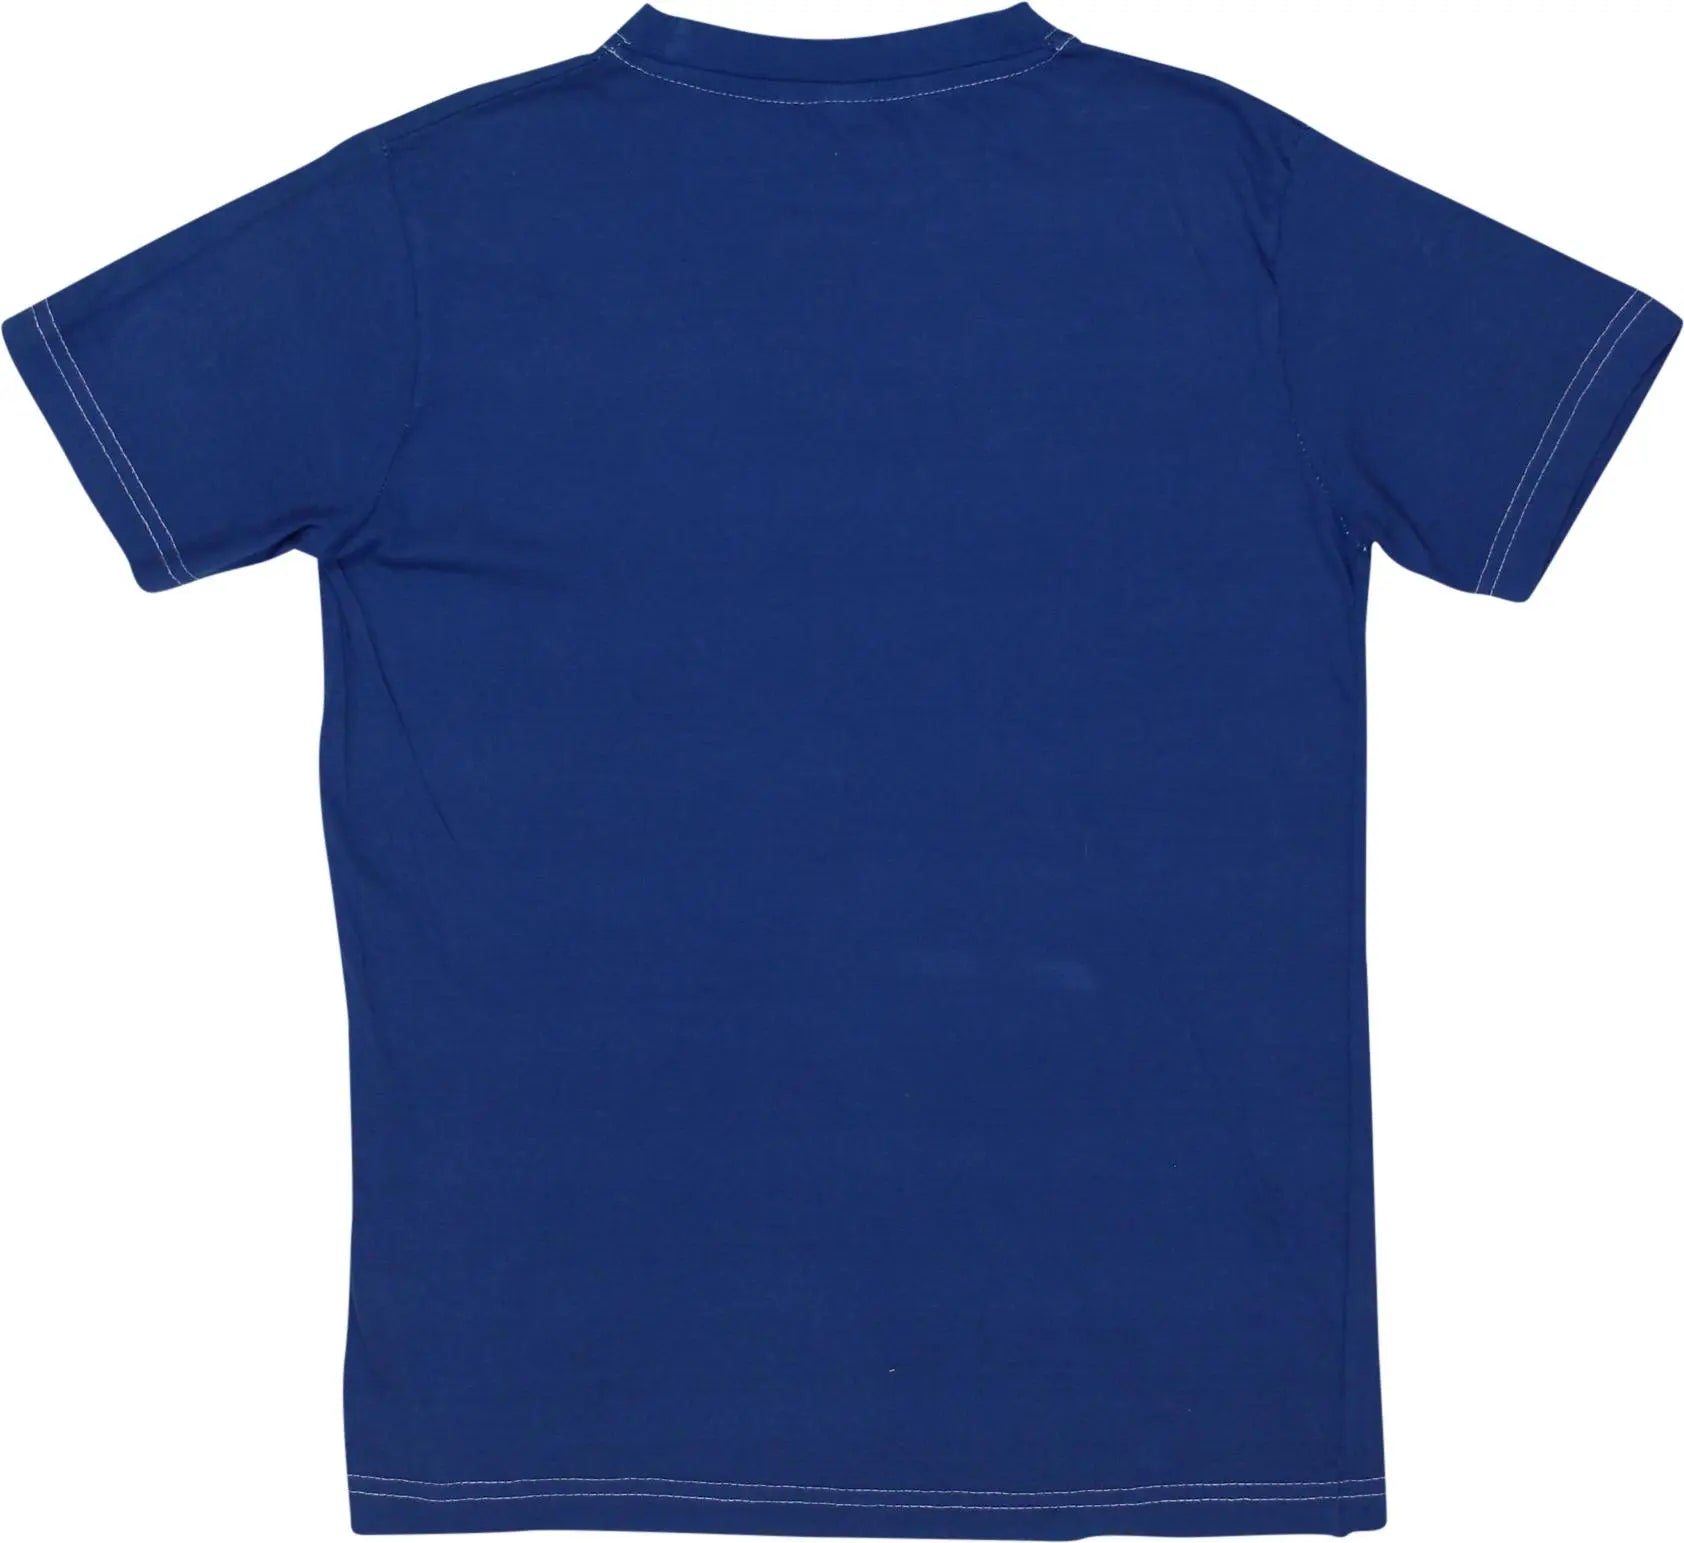 Zeeman - BLUE6137- ThriftTale.com - Vintage and second handclothing